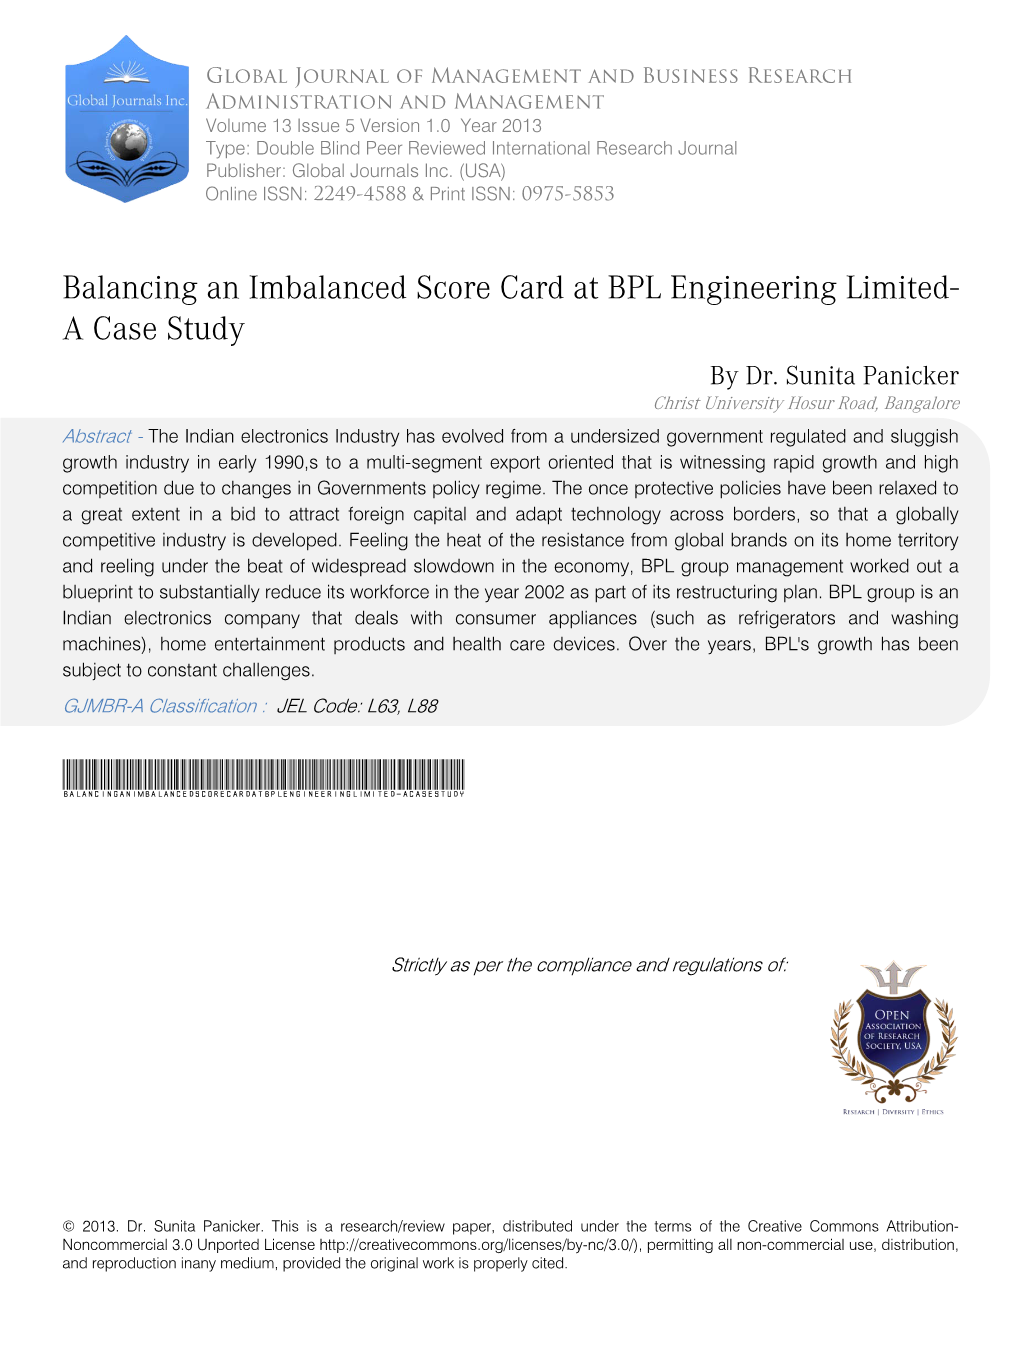 Balancing an Imbalanced Score Card at BPL Engineering Limited-A Case Study